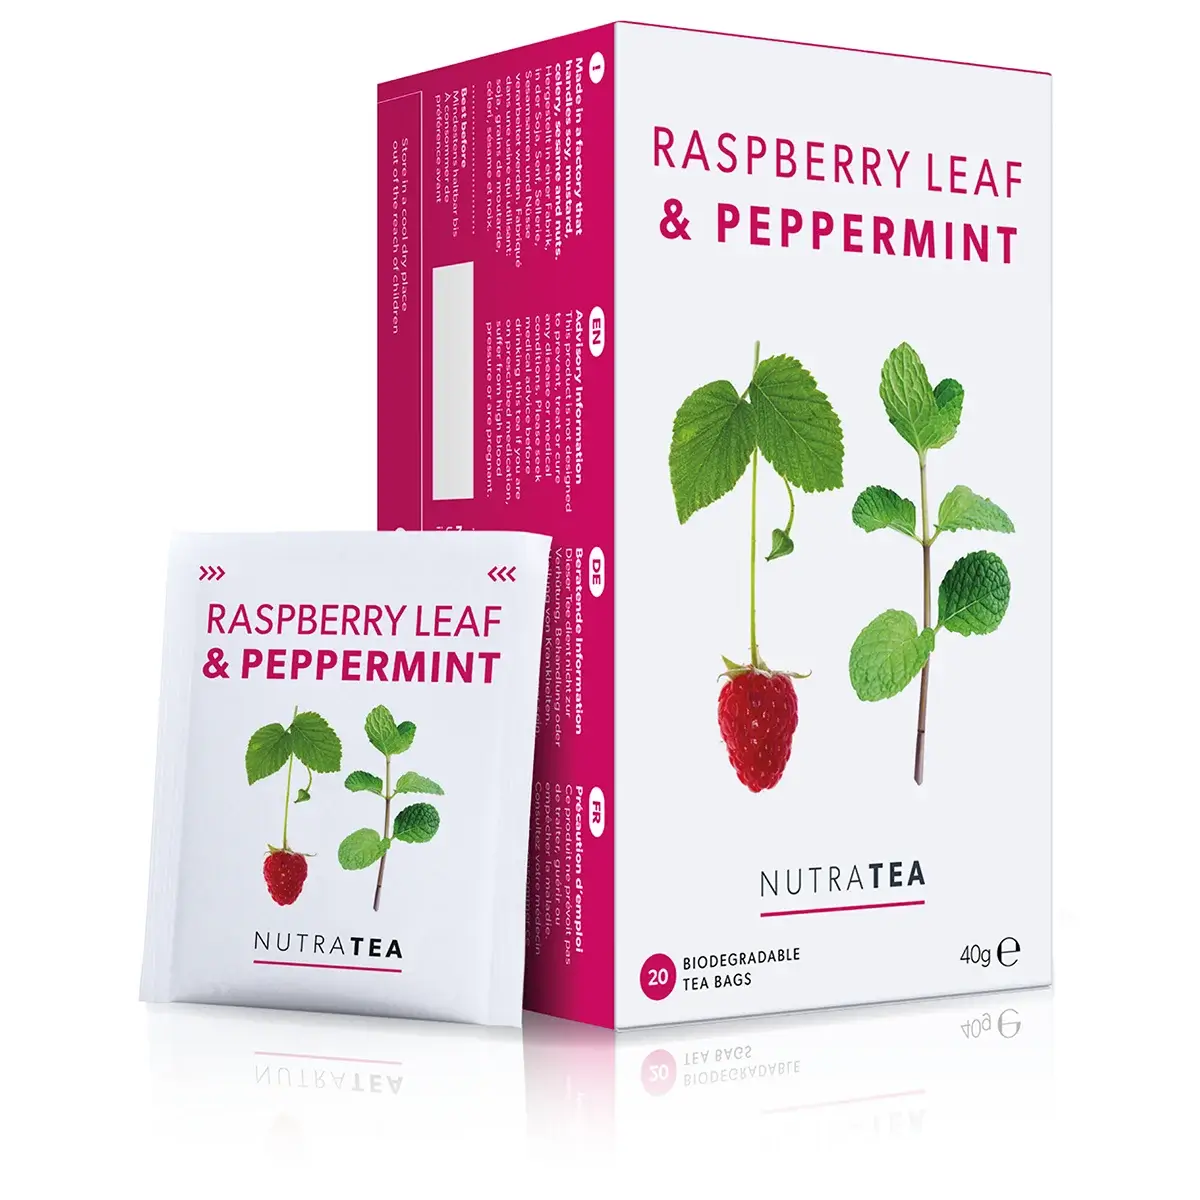 Raspberry Leaf & Peppermint Tea - Herbal Tea - 20 Biodegradable Tea Bags